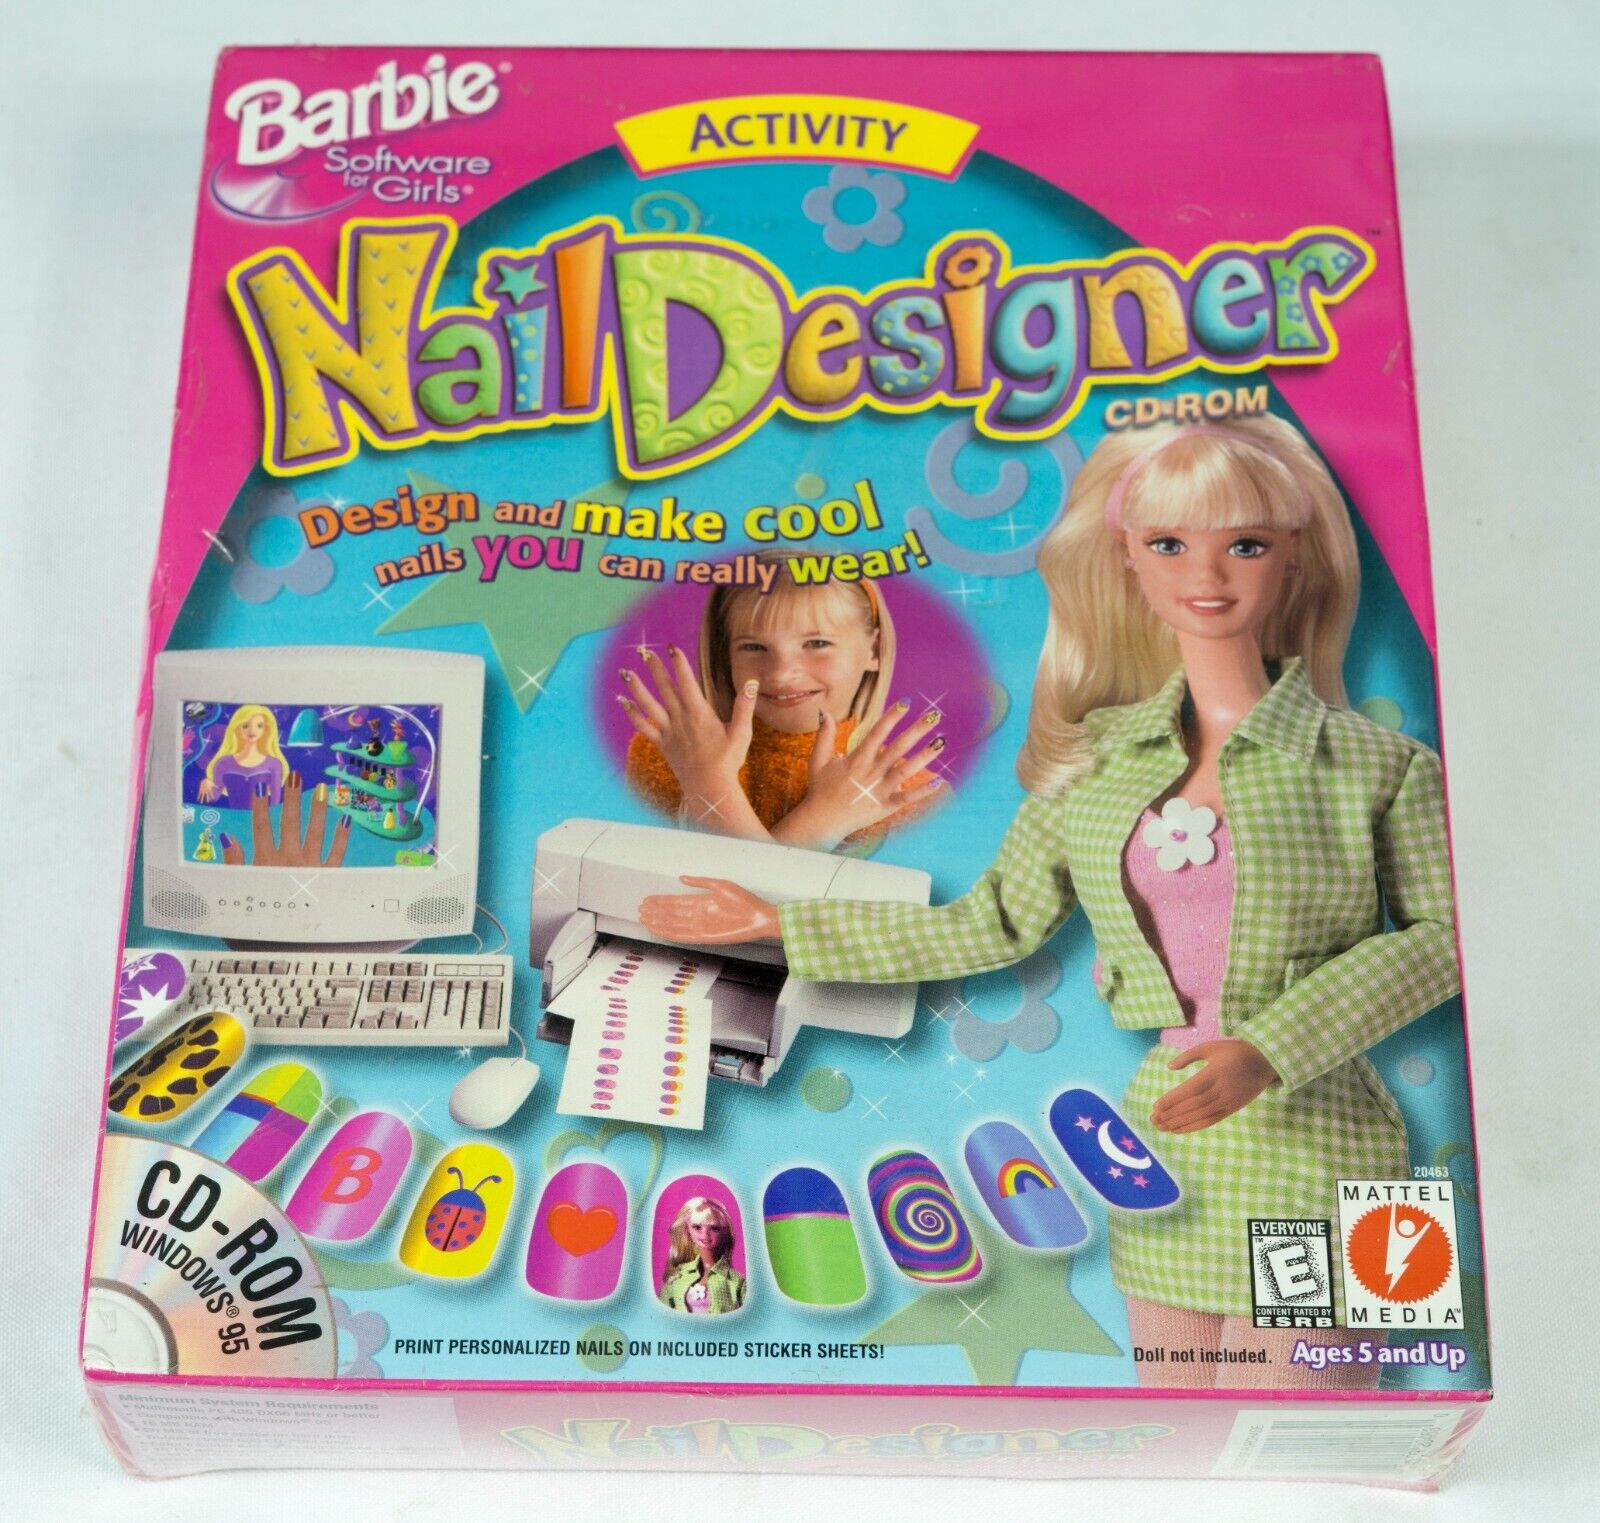 Vintage Mattel Barbie Software for Girls Nail Designer CD-ROM Windows 95 ST534